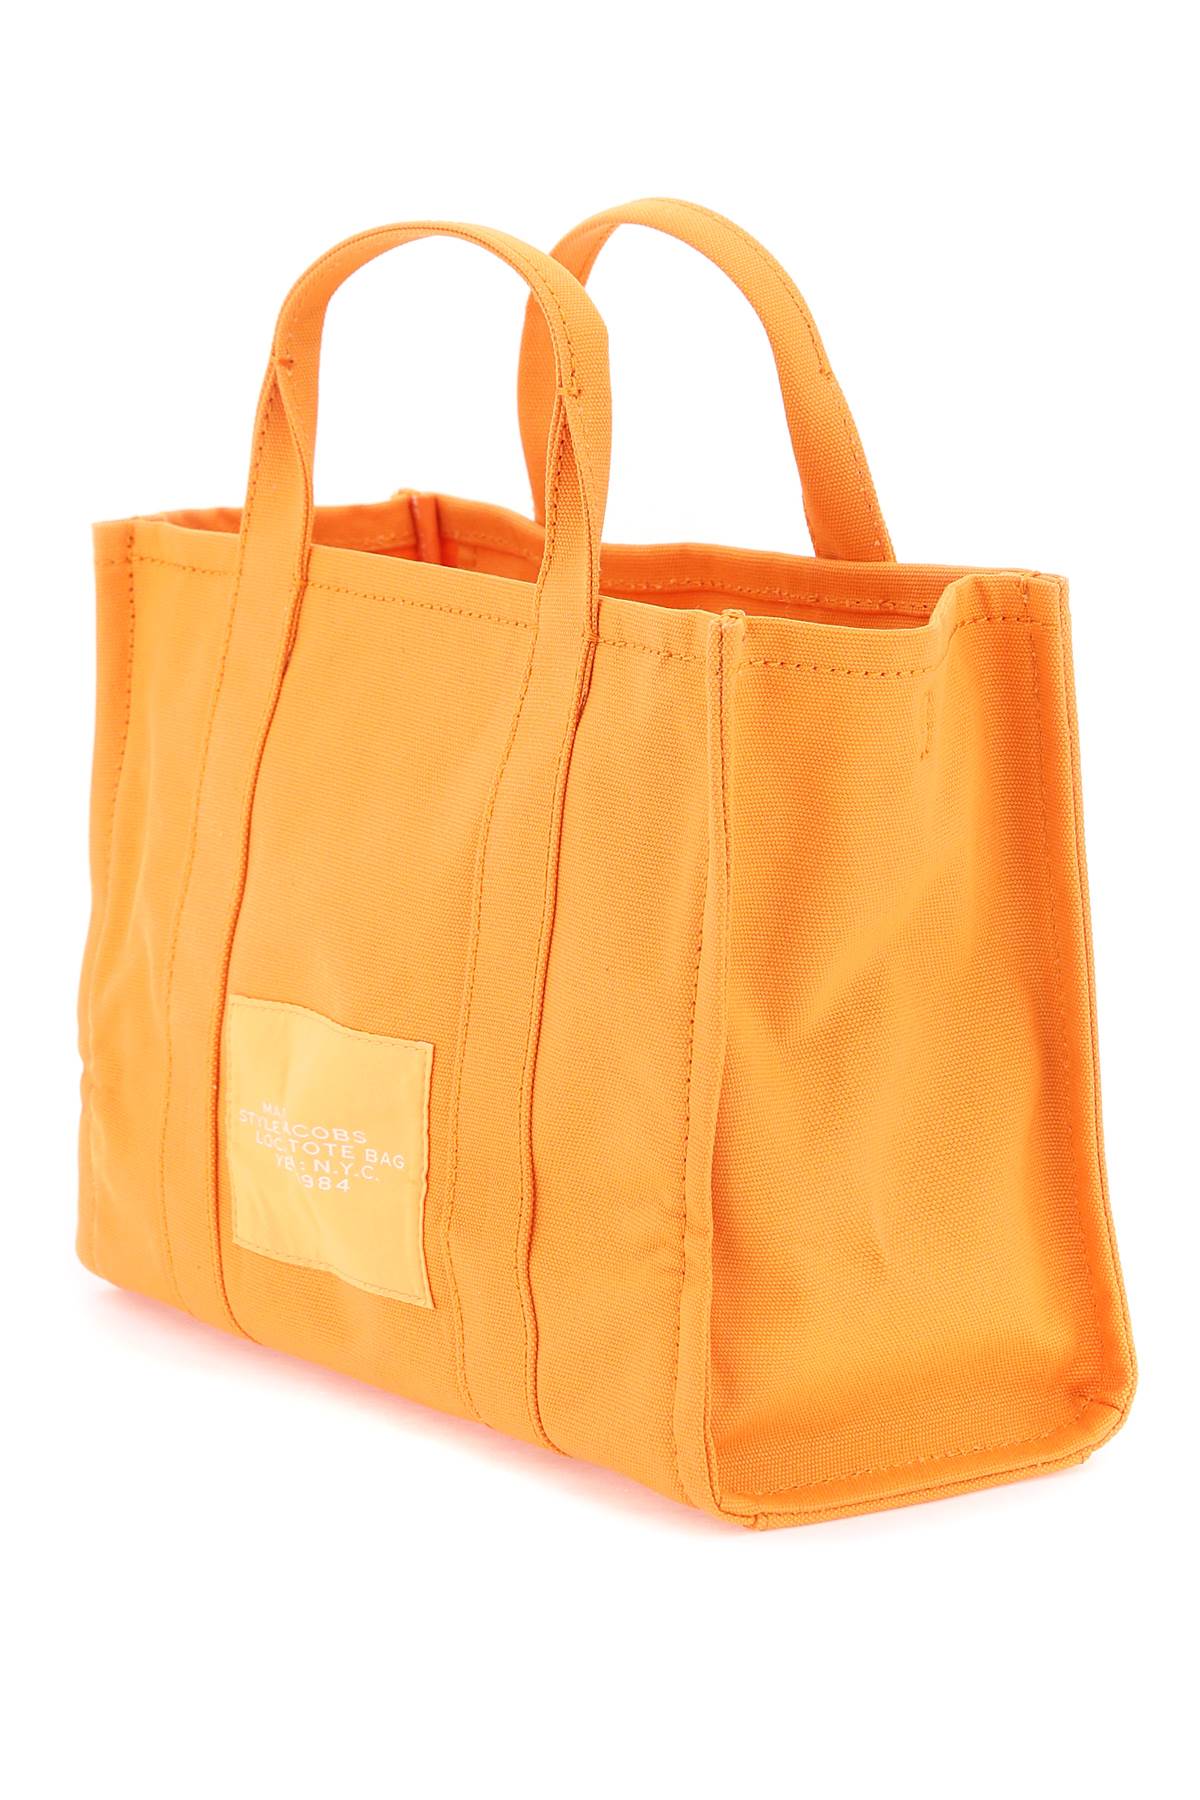 Shop Marc Jacobs The Tote Bag Medium In Tangerine (orange)